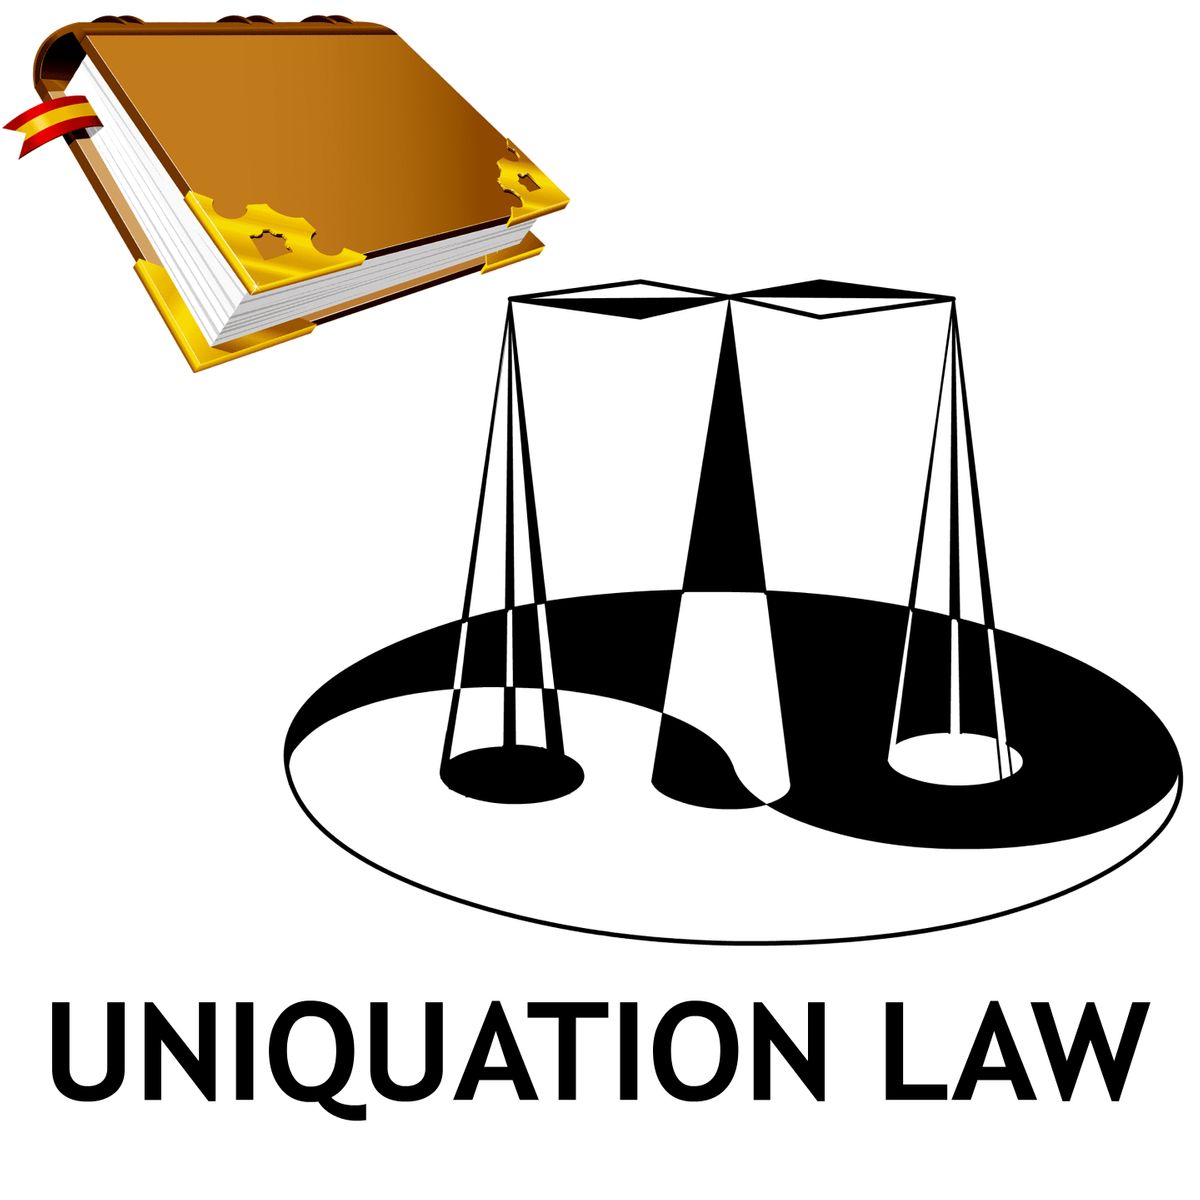 Download: UNIQUATION LAW BOOK